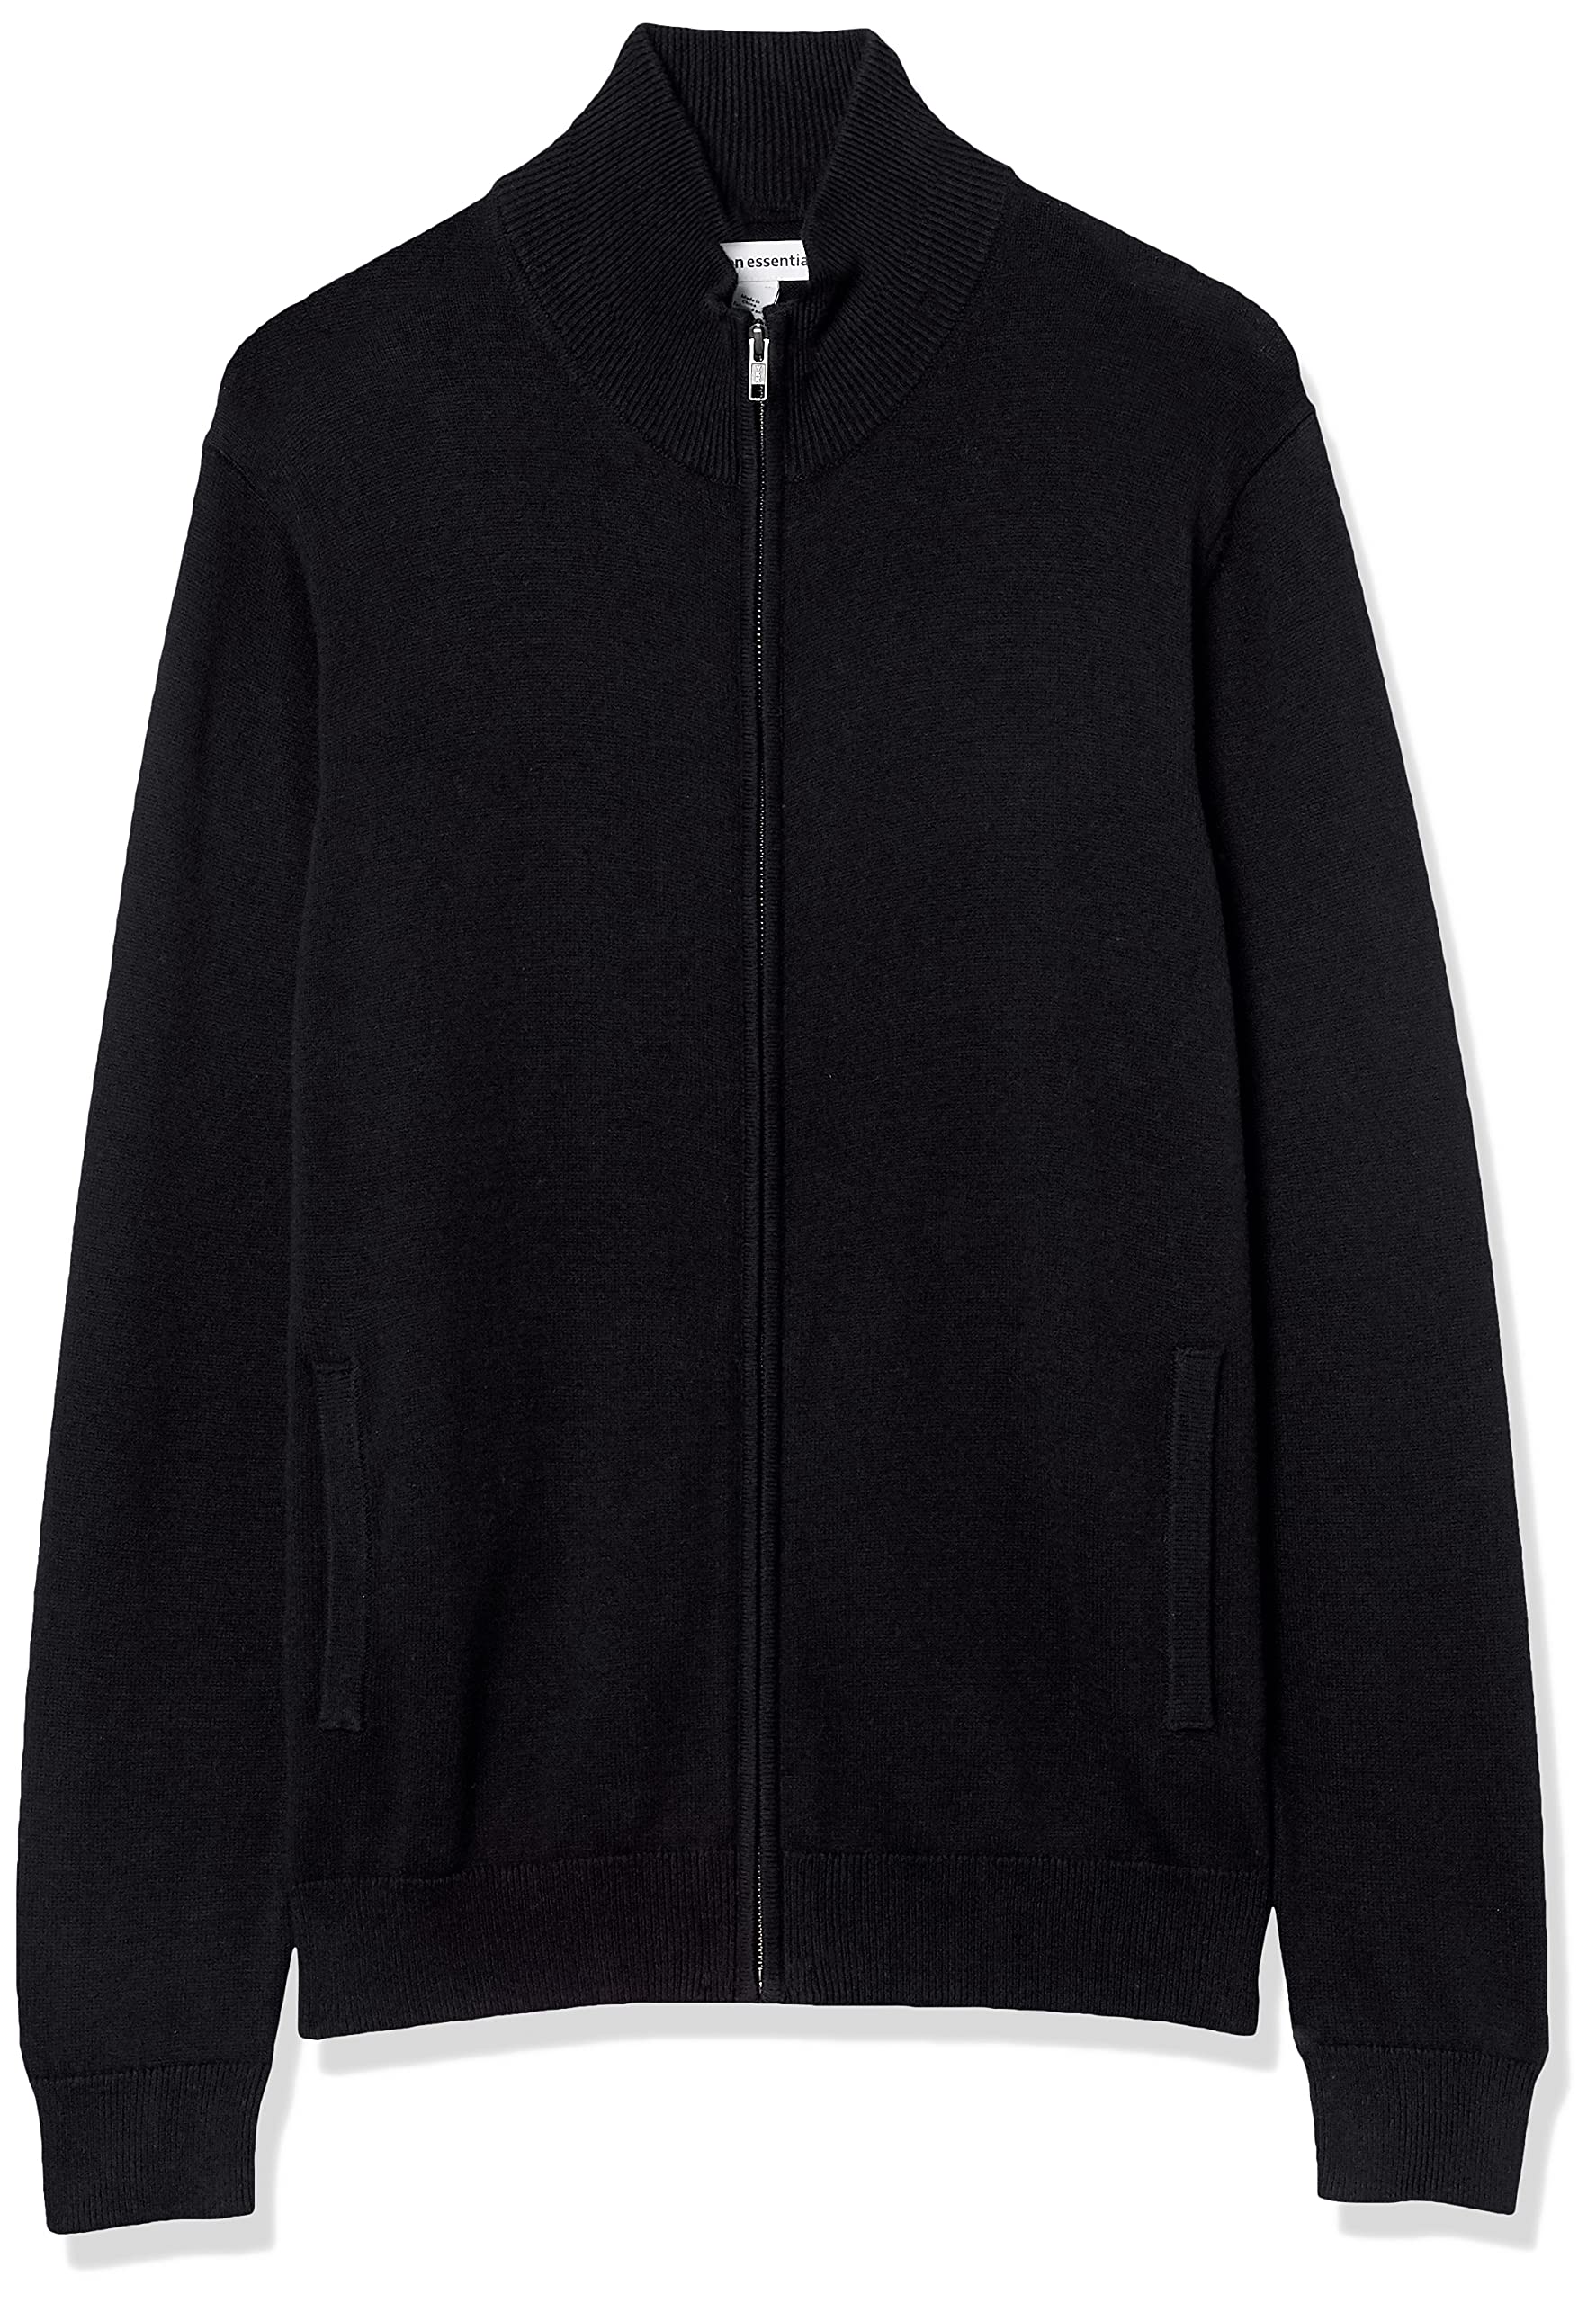 Amazon Essentials Men's Full-Zip Cotton Sweater